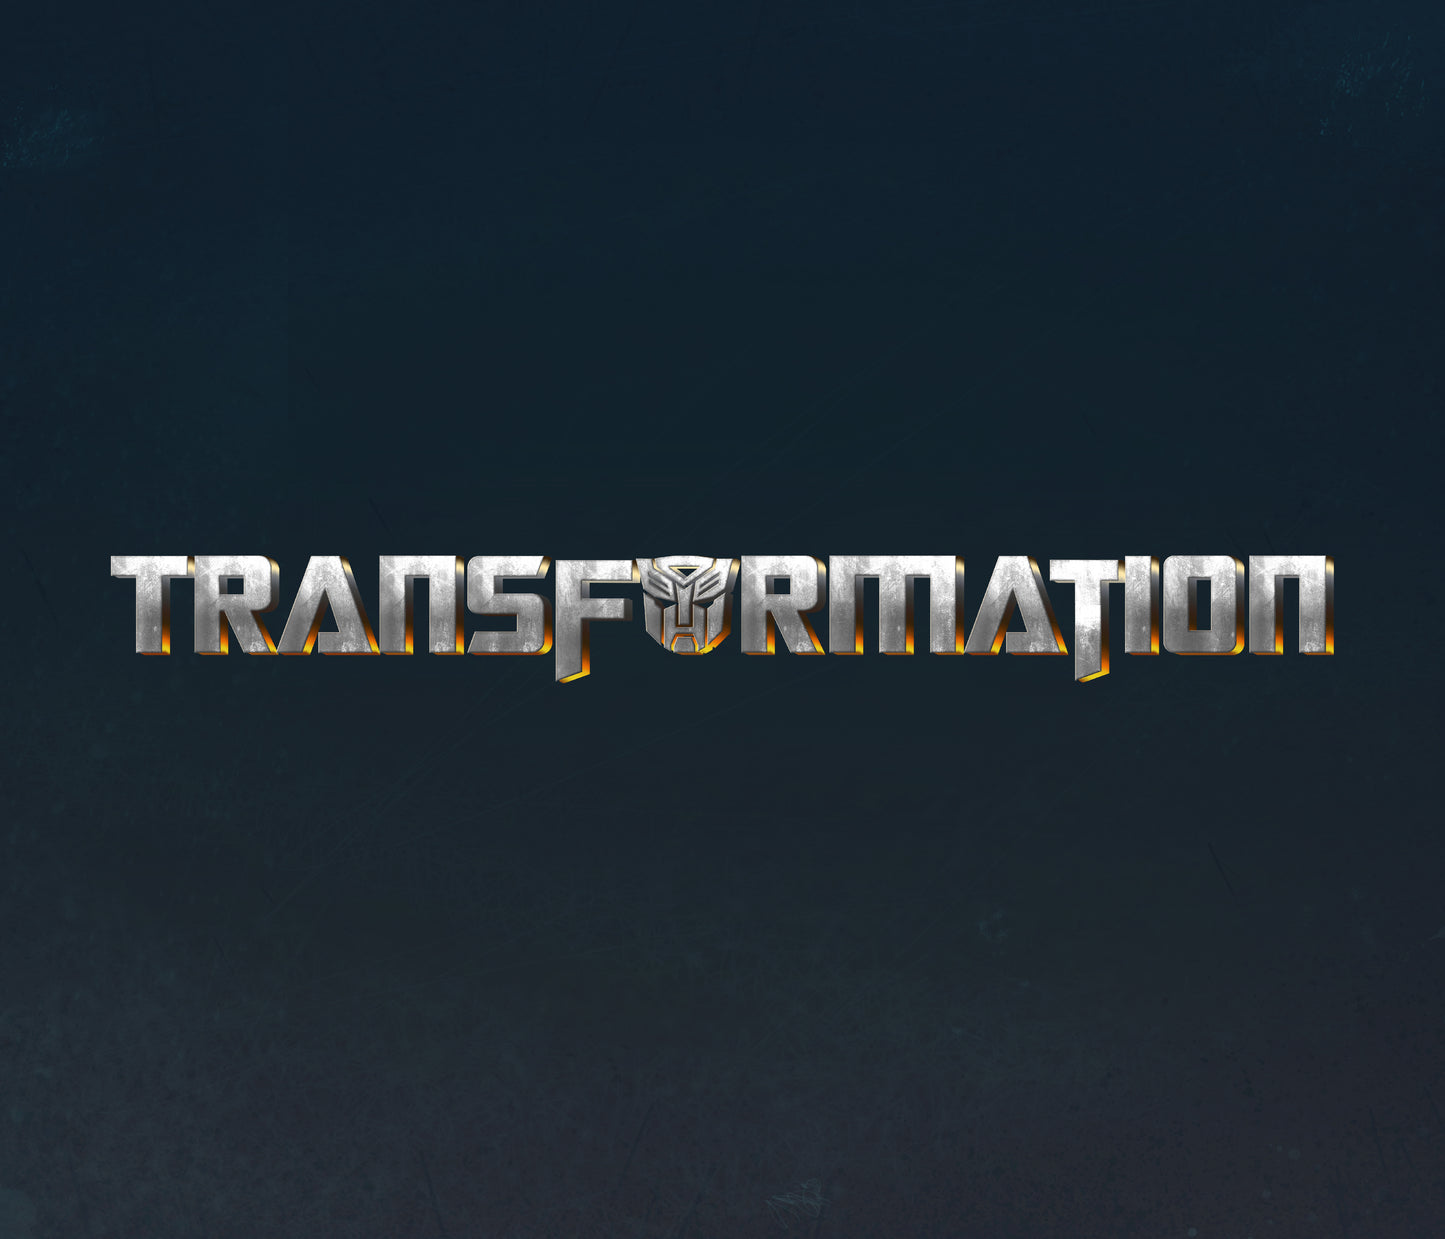 Transformers Textured Font